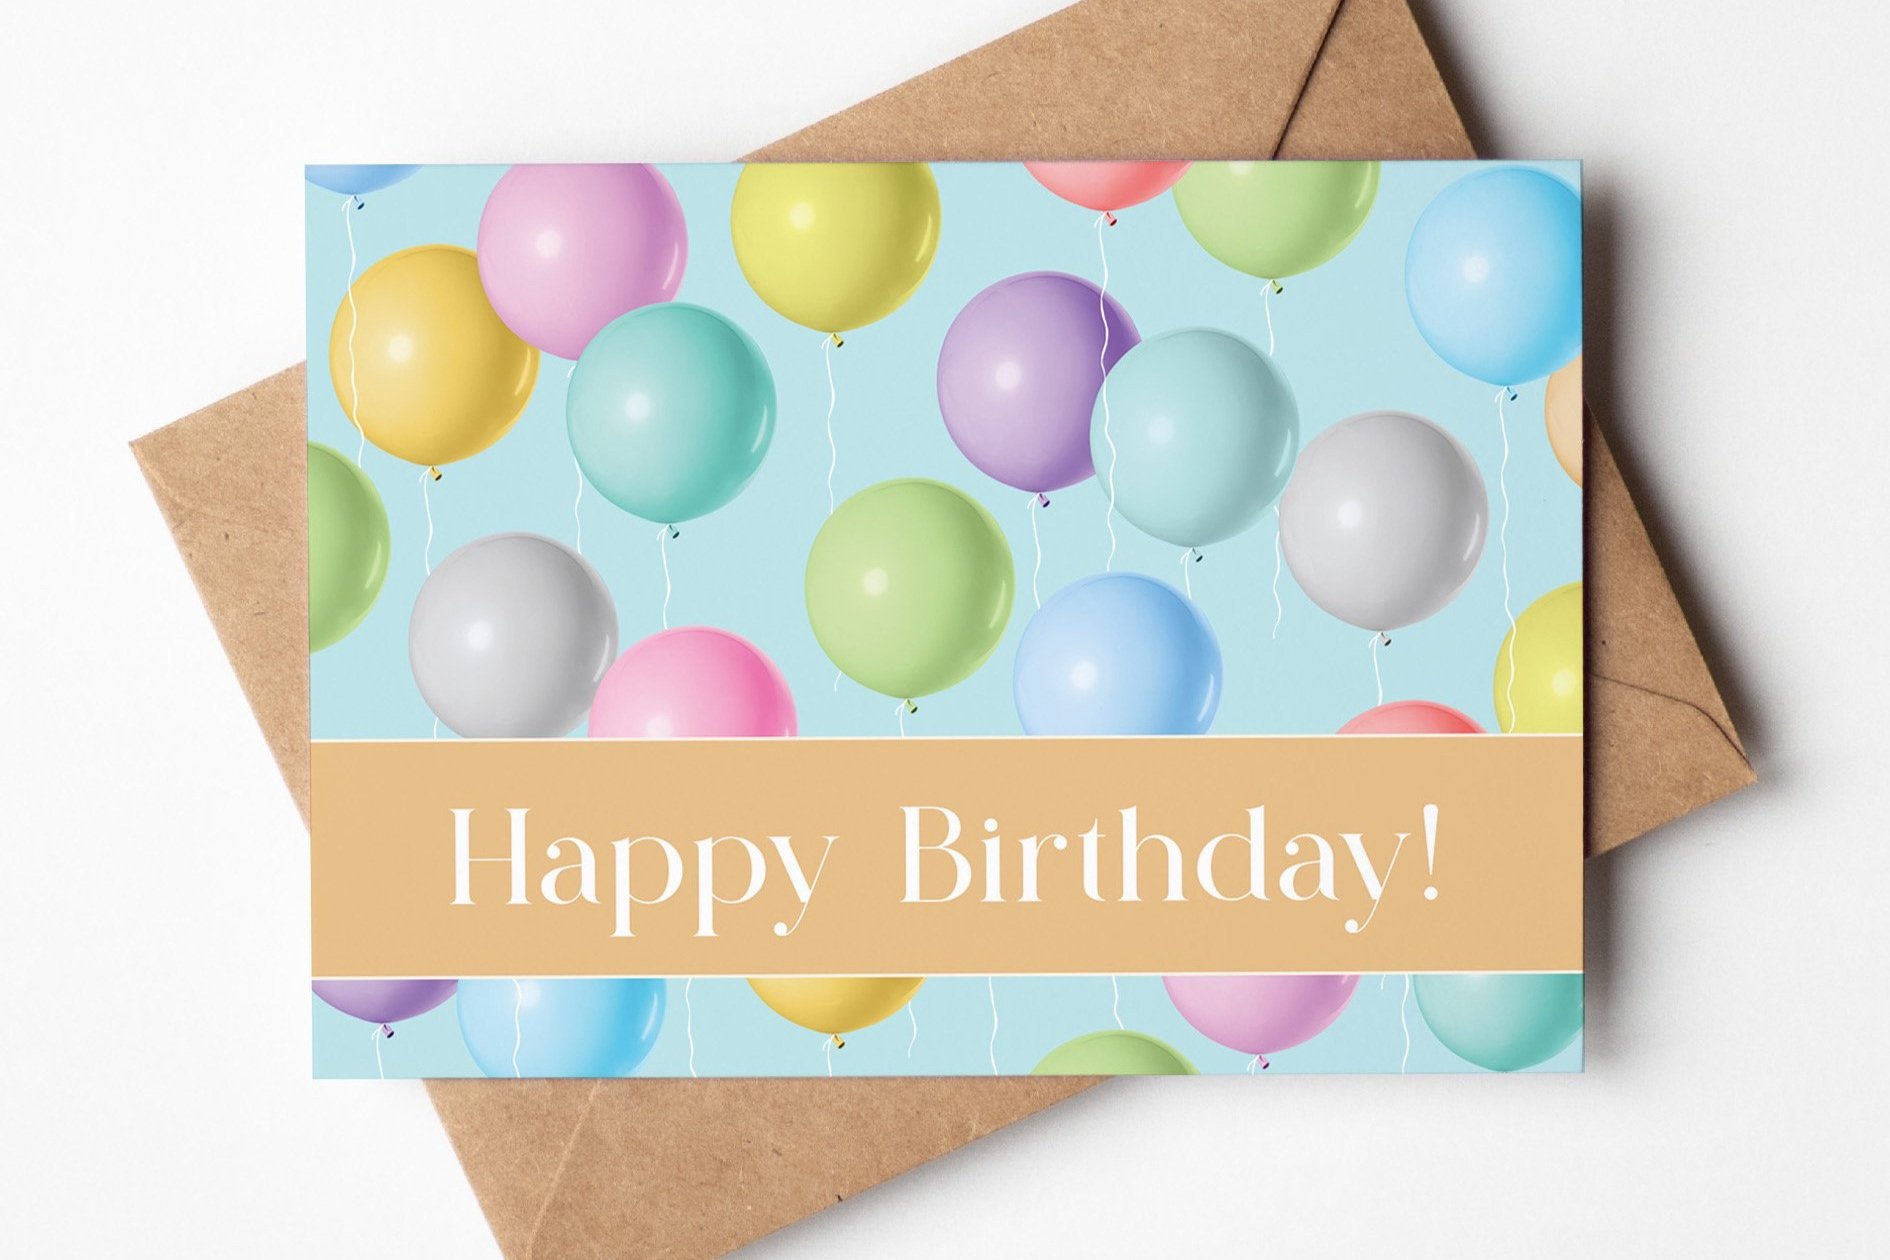 custom-digital-printing-business-client-birthday-greeting-card-naebr-design